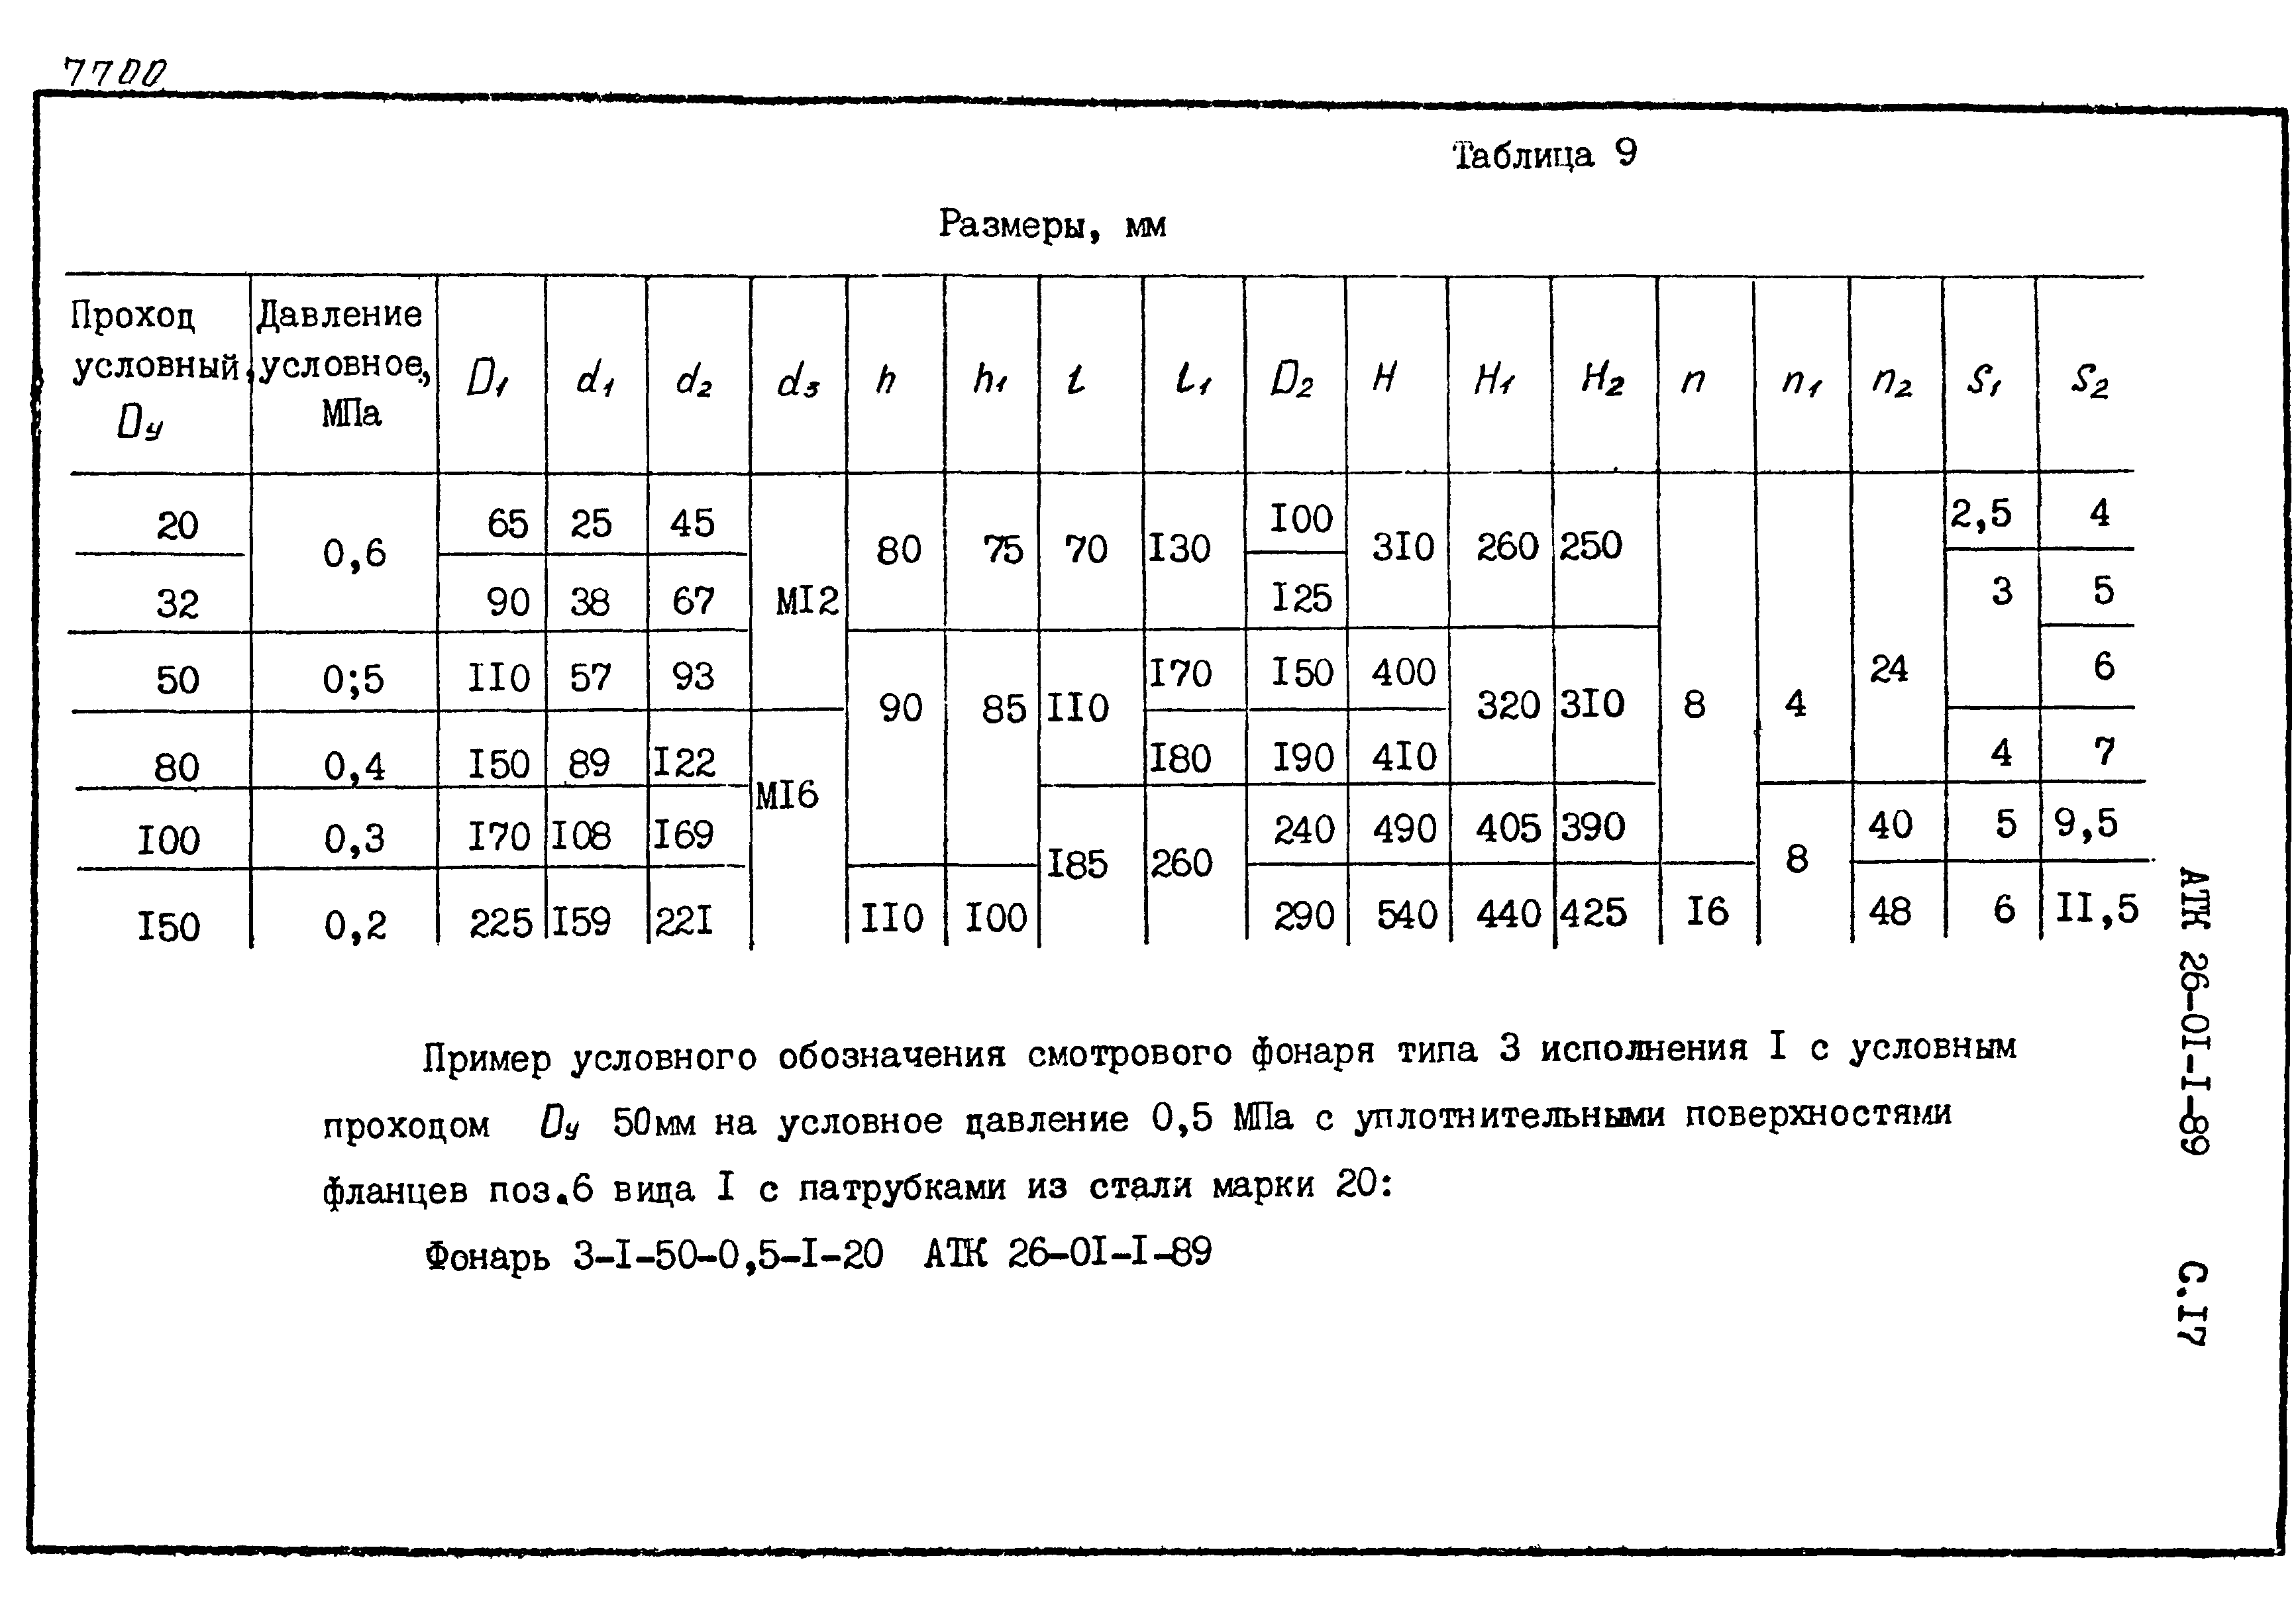 АТК 26-01-1-89